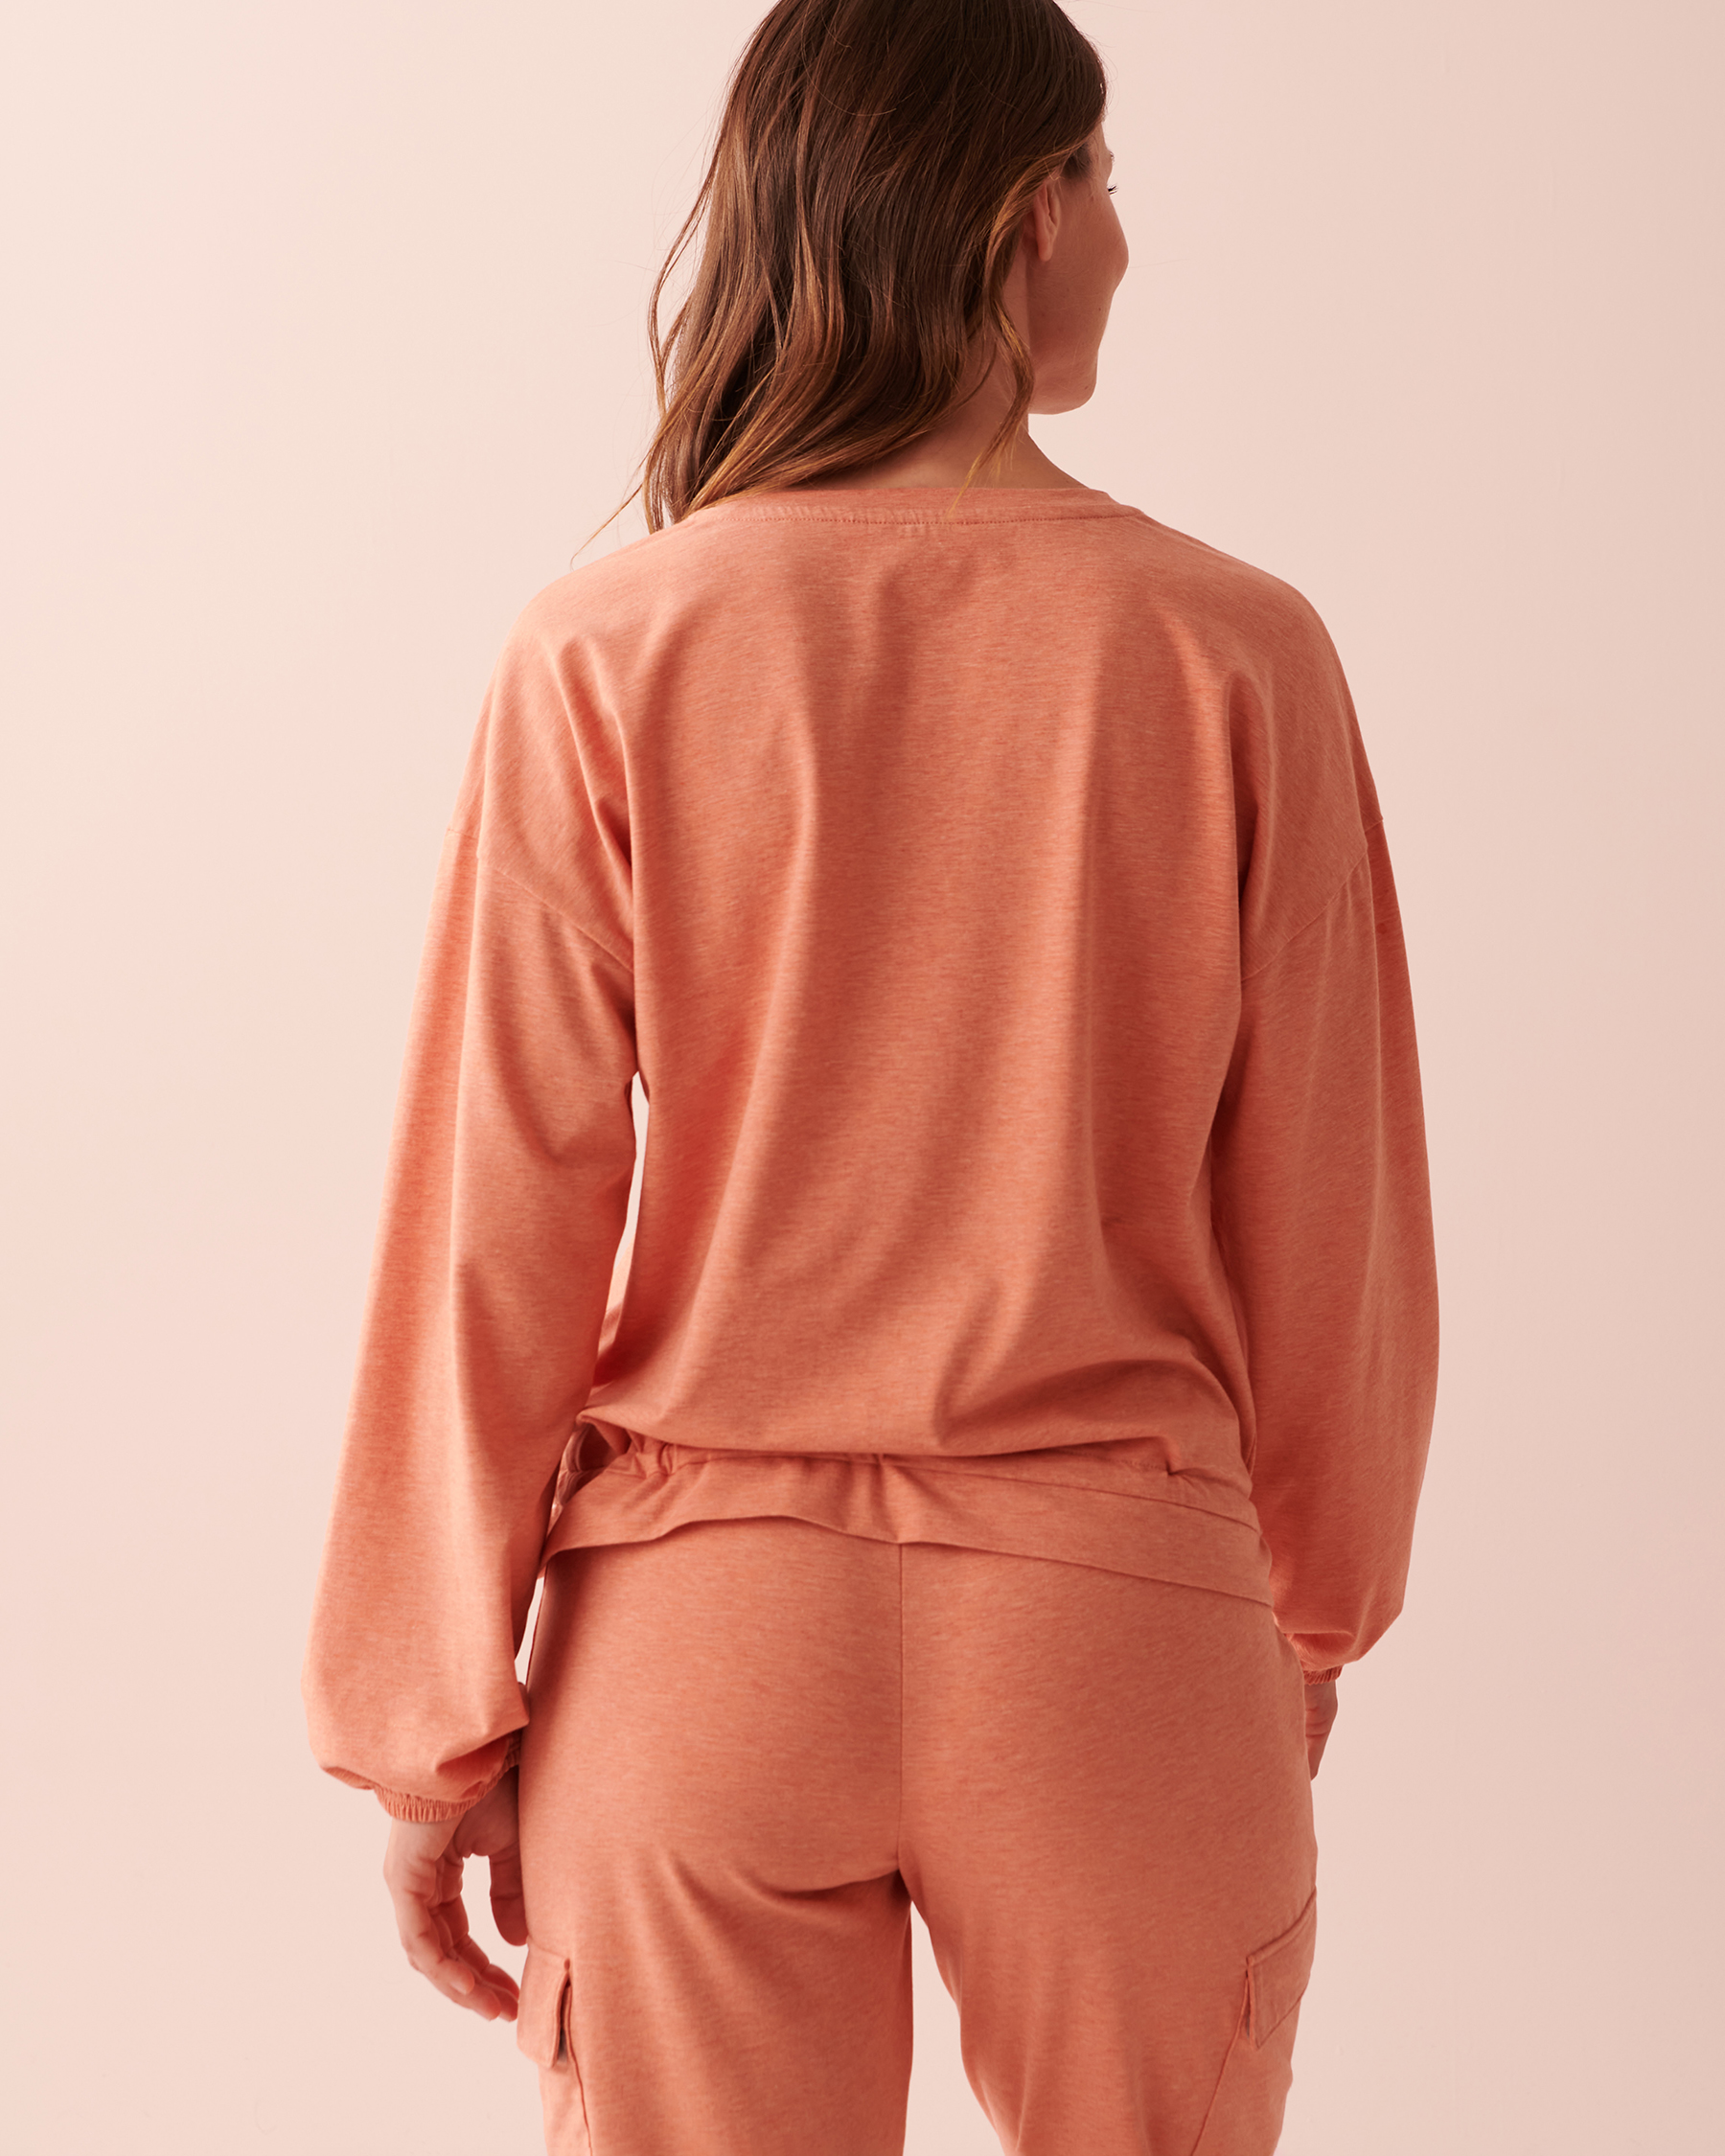 LA VIE EN ROSE Crew Neck Long Sleeve Shirt Dark apricot orange mix 40100456 - View5